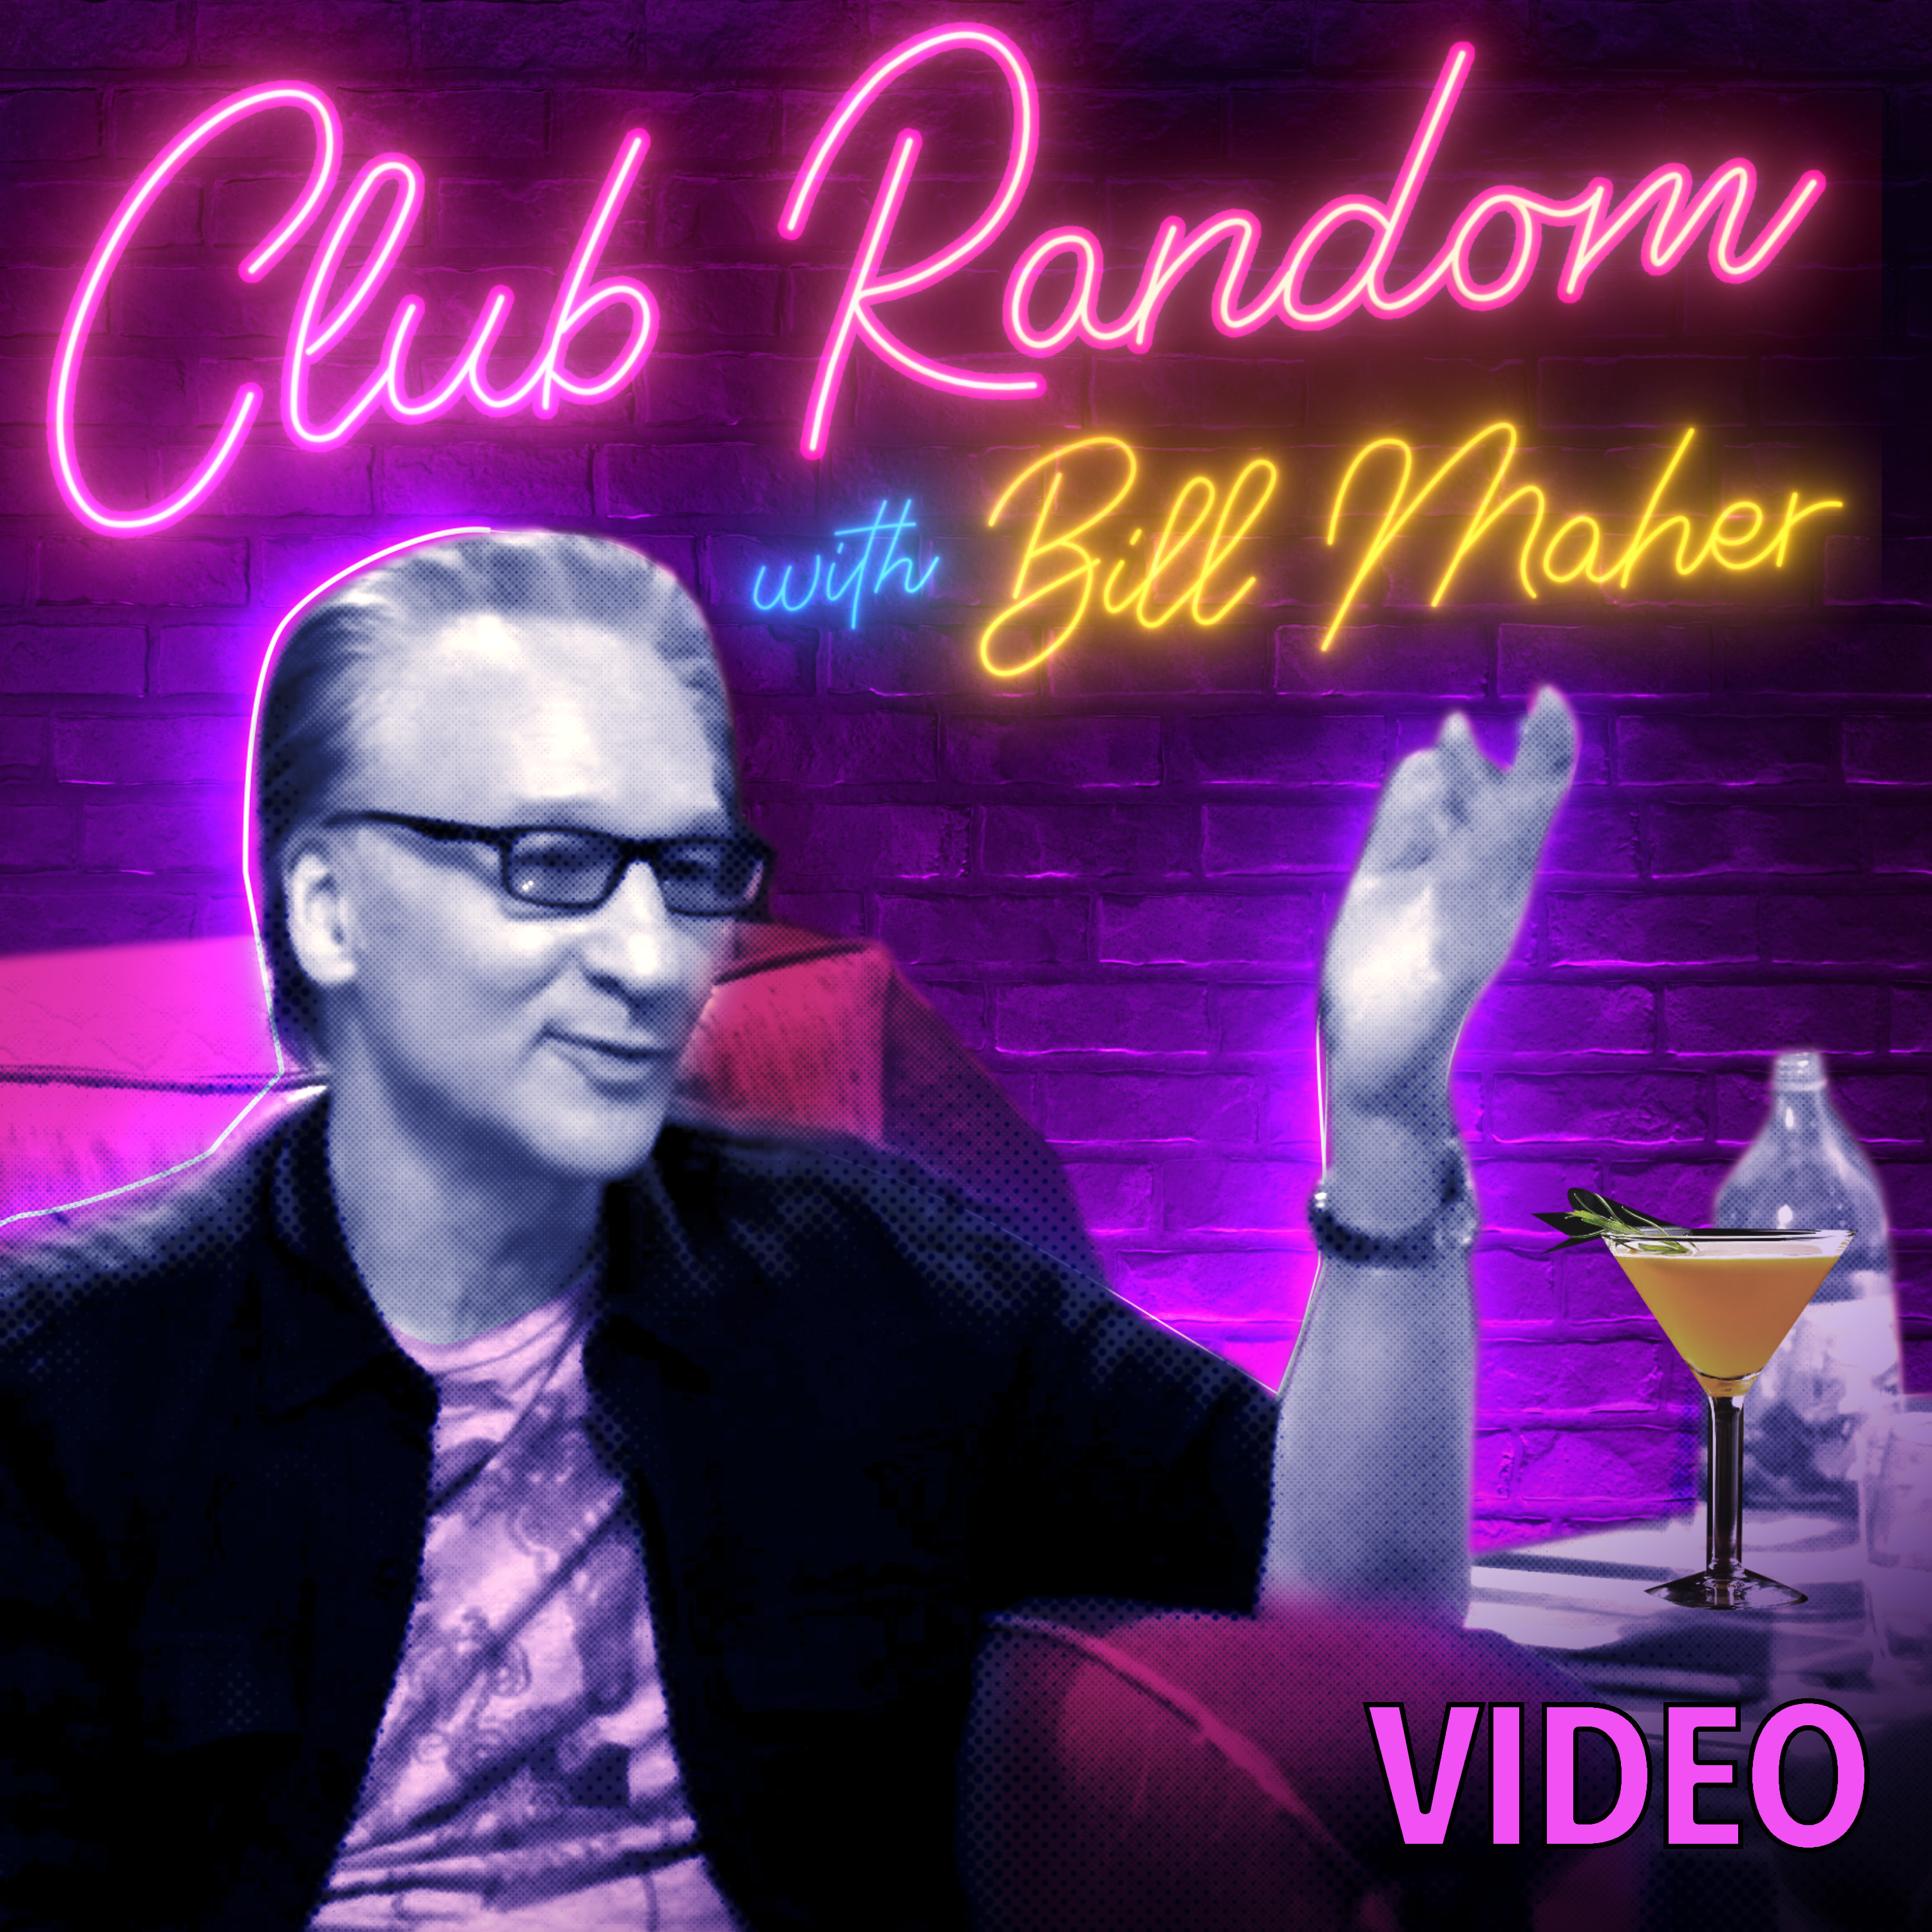 Video: Marianne Williamson | Club Random with Bill Maher